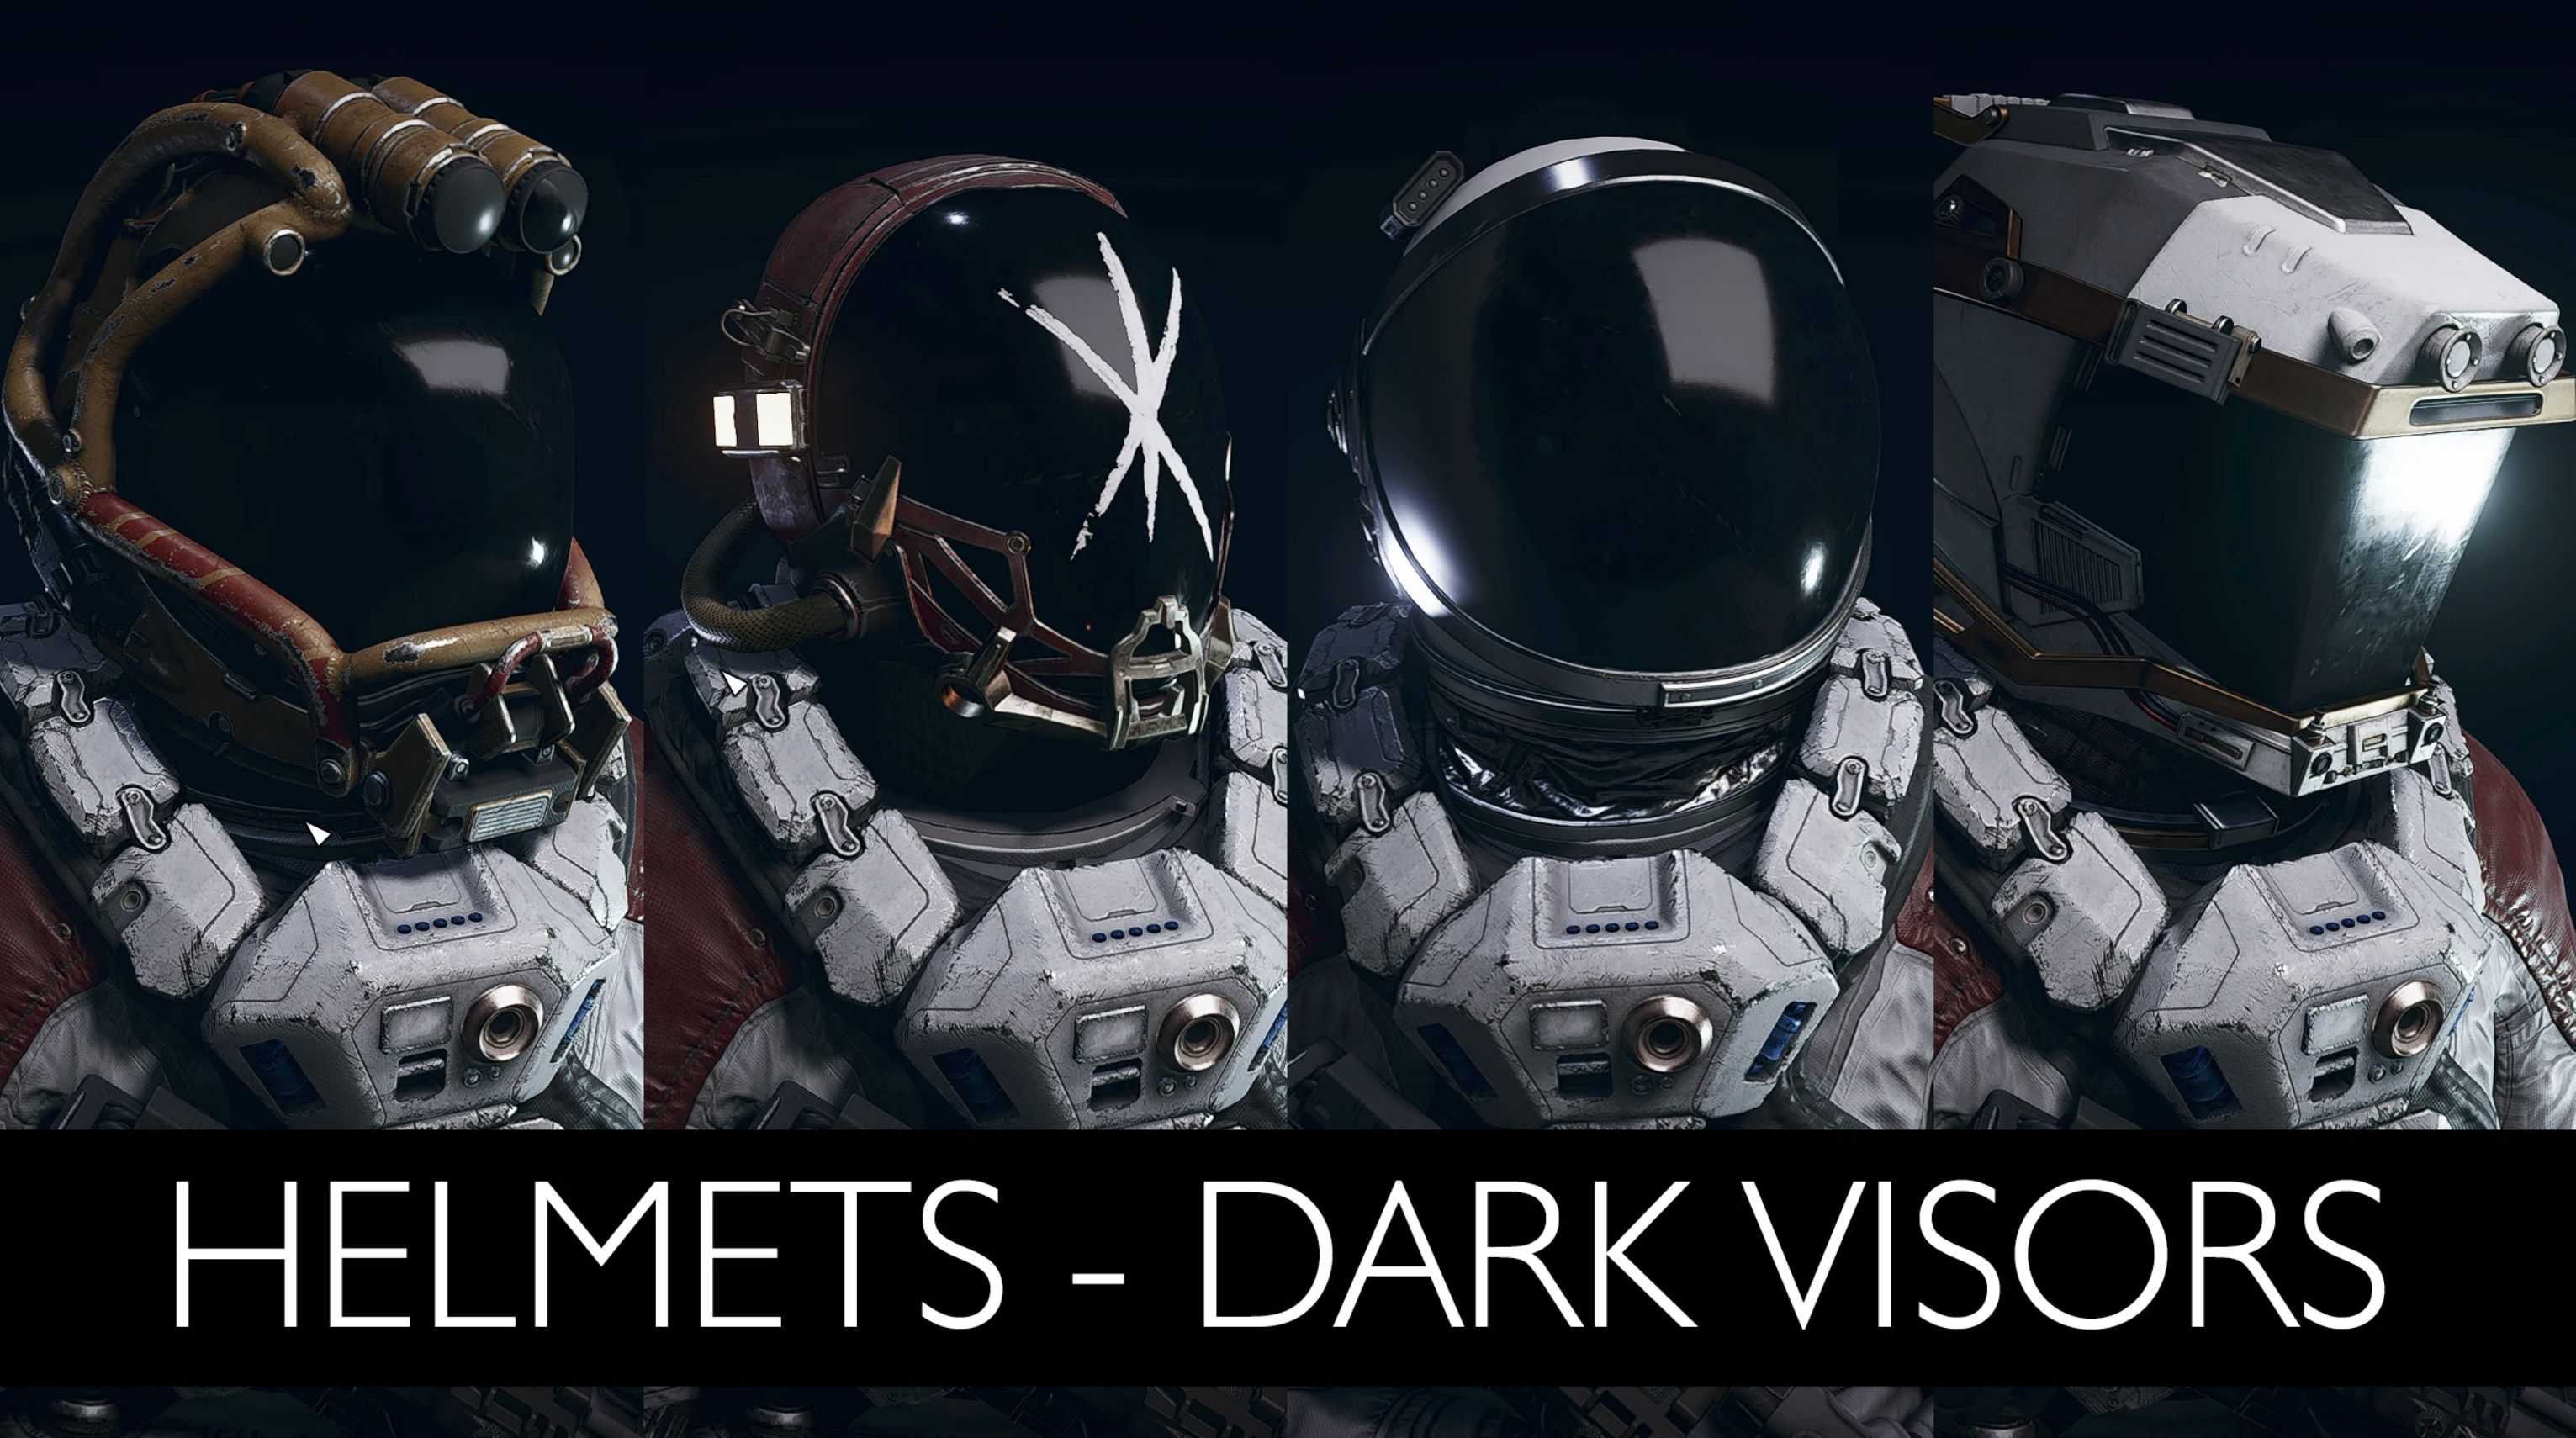 NebulaForge Visor Space Wars Helmet from the Stars